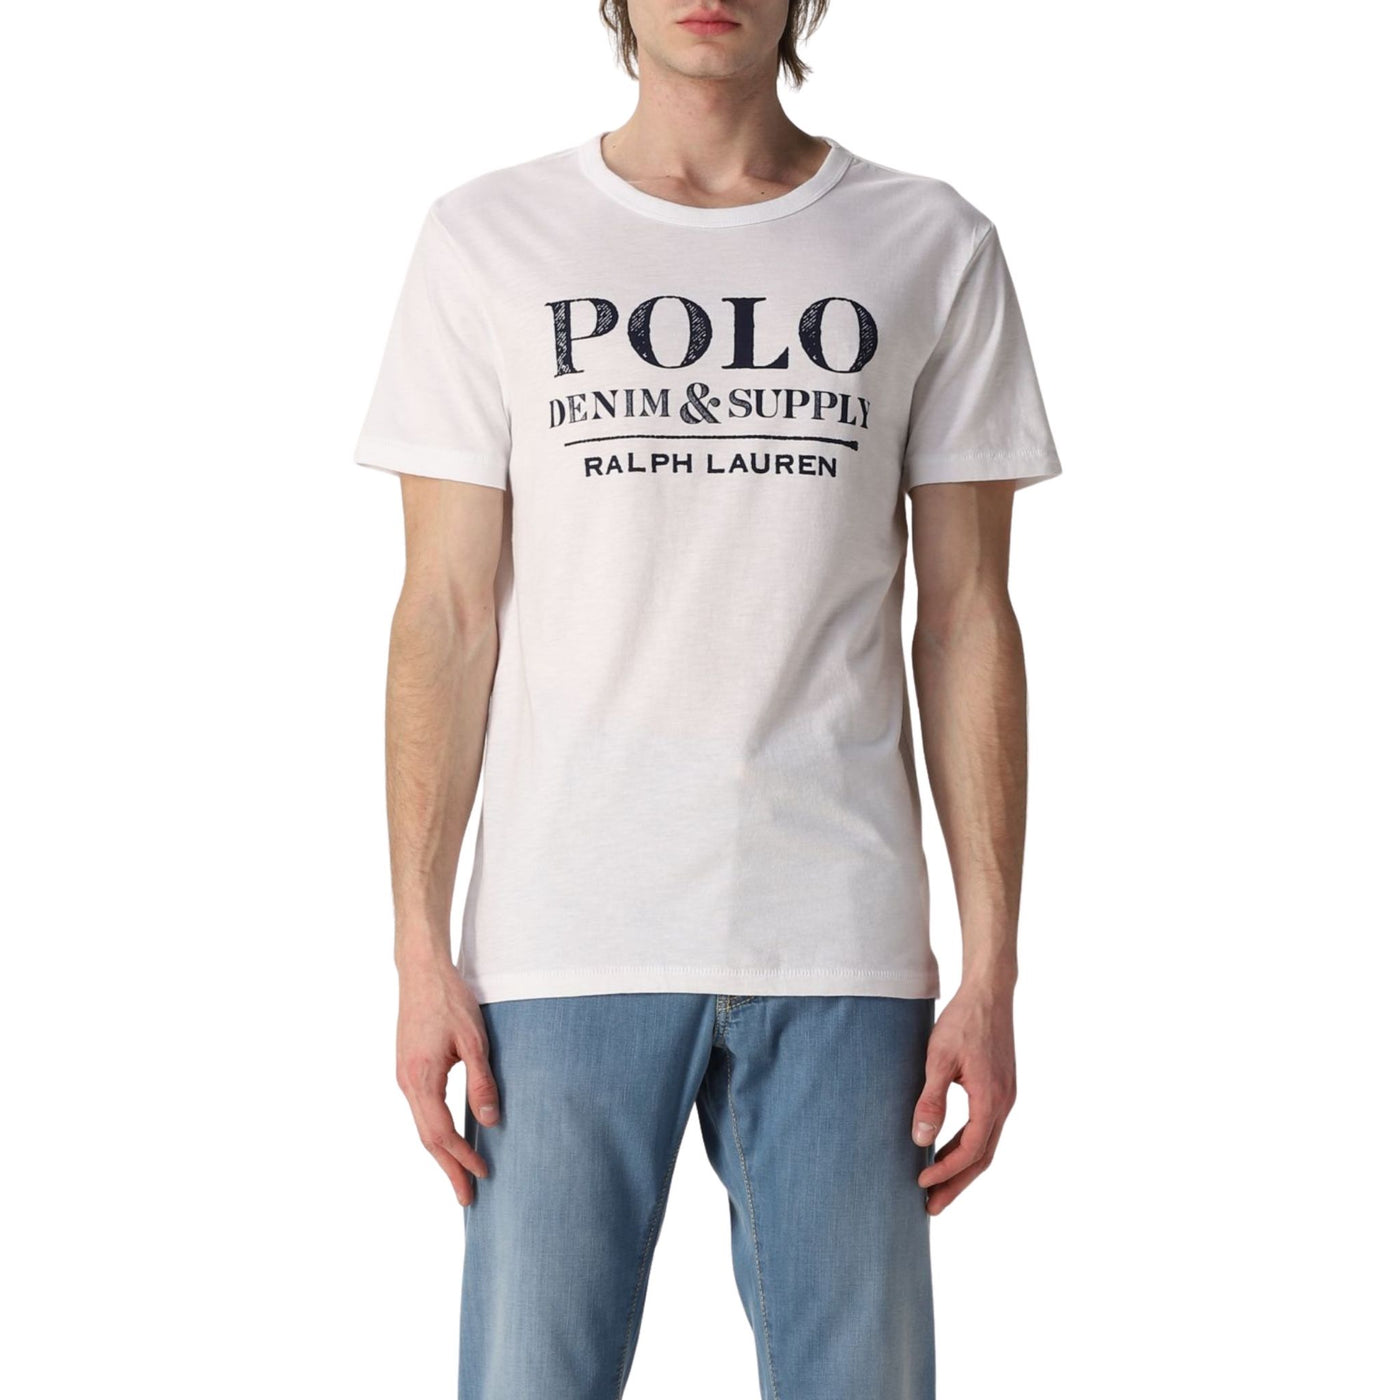 T-shirt uomo bianca Polo Ralph Lauren su modello vista frontale